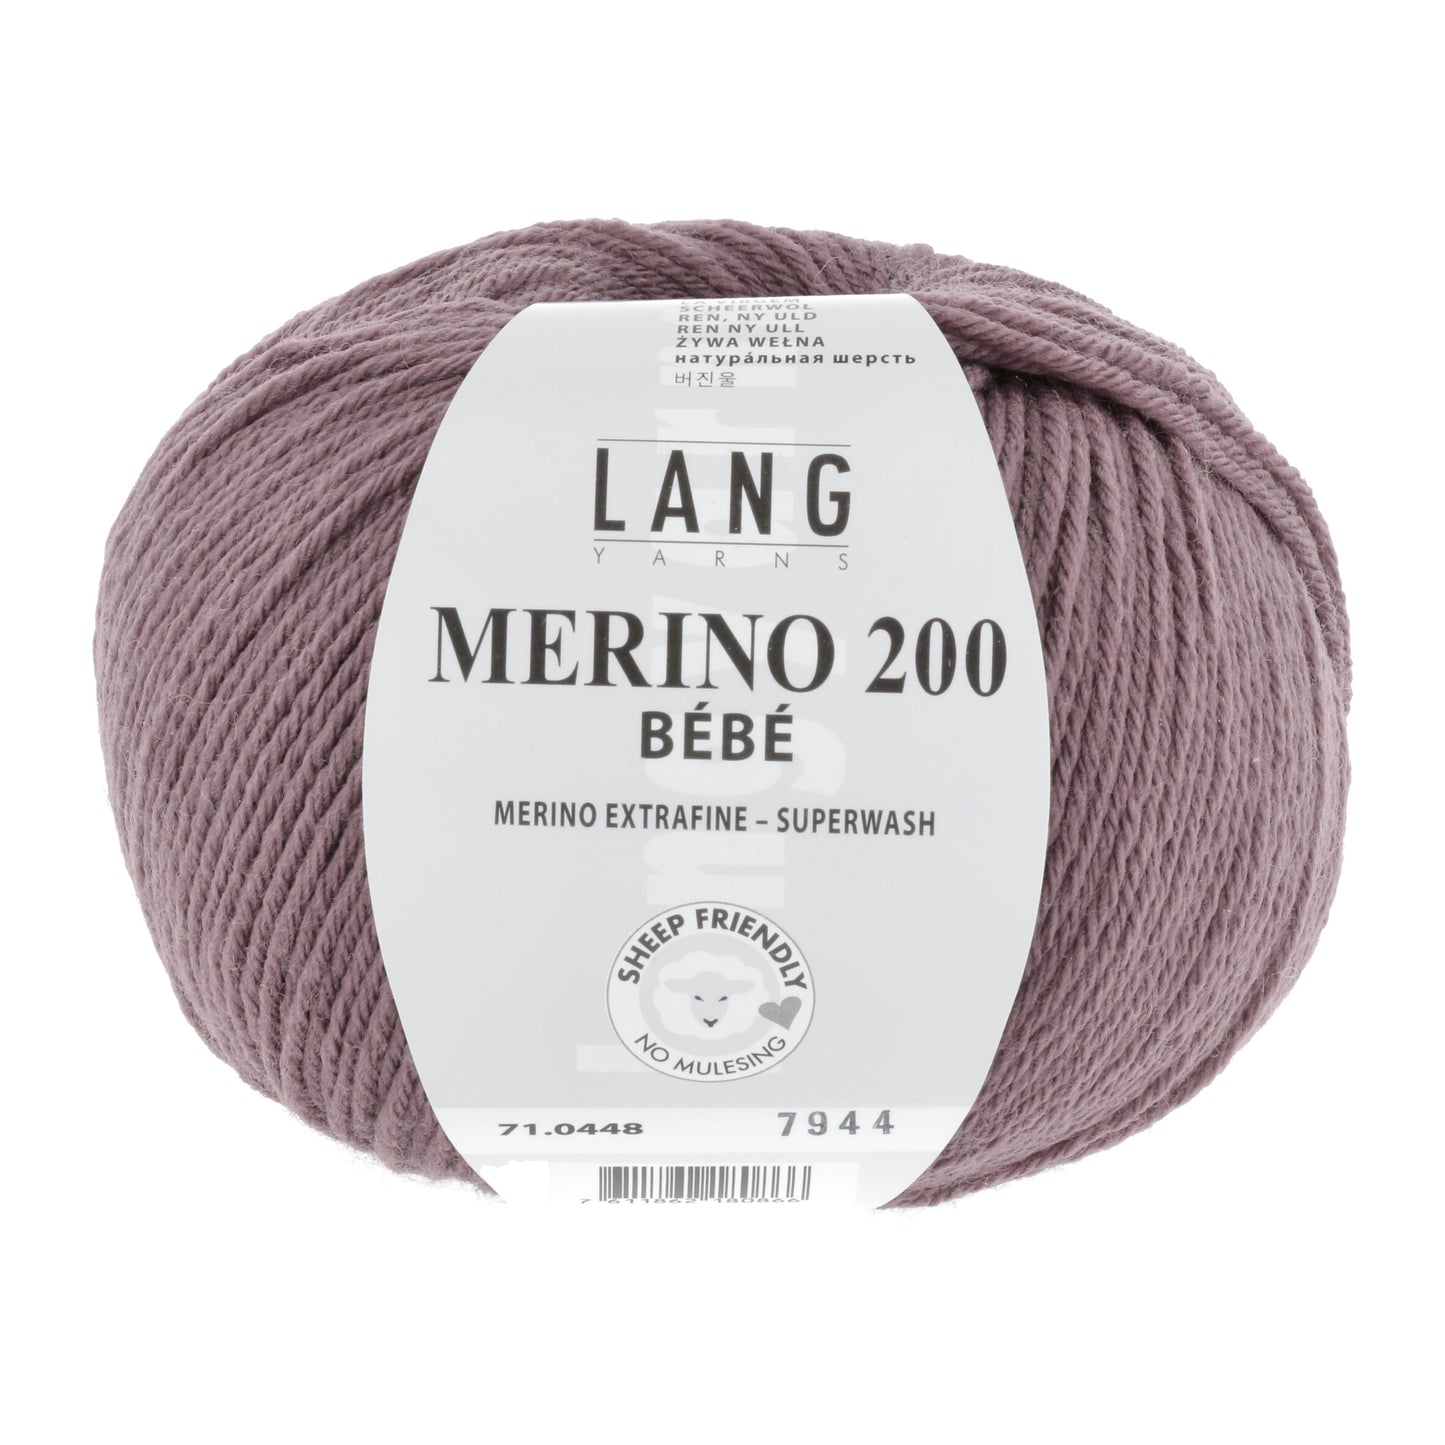 Lang Yarns Merino 200 Bebe / 71.0448